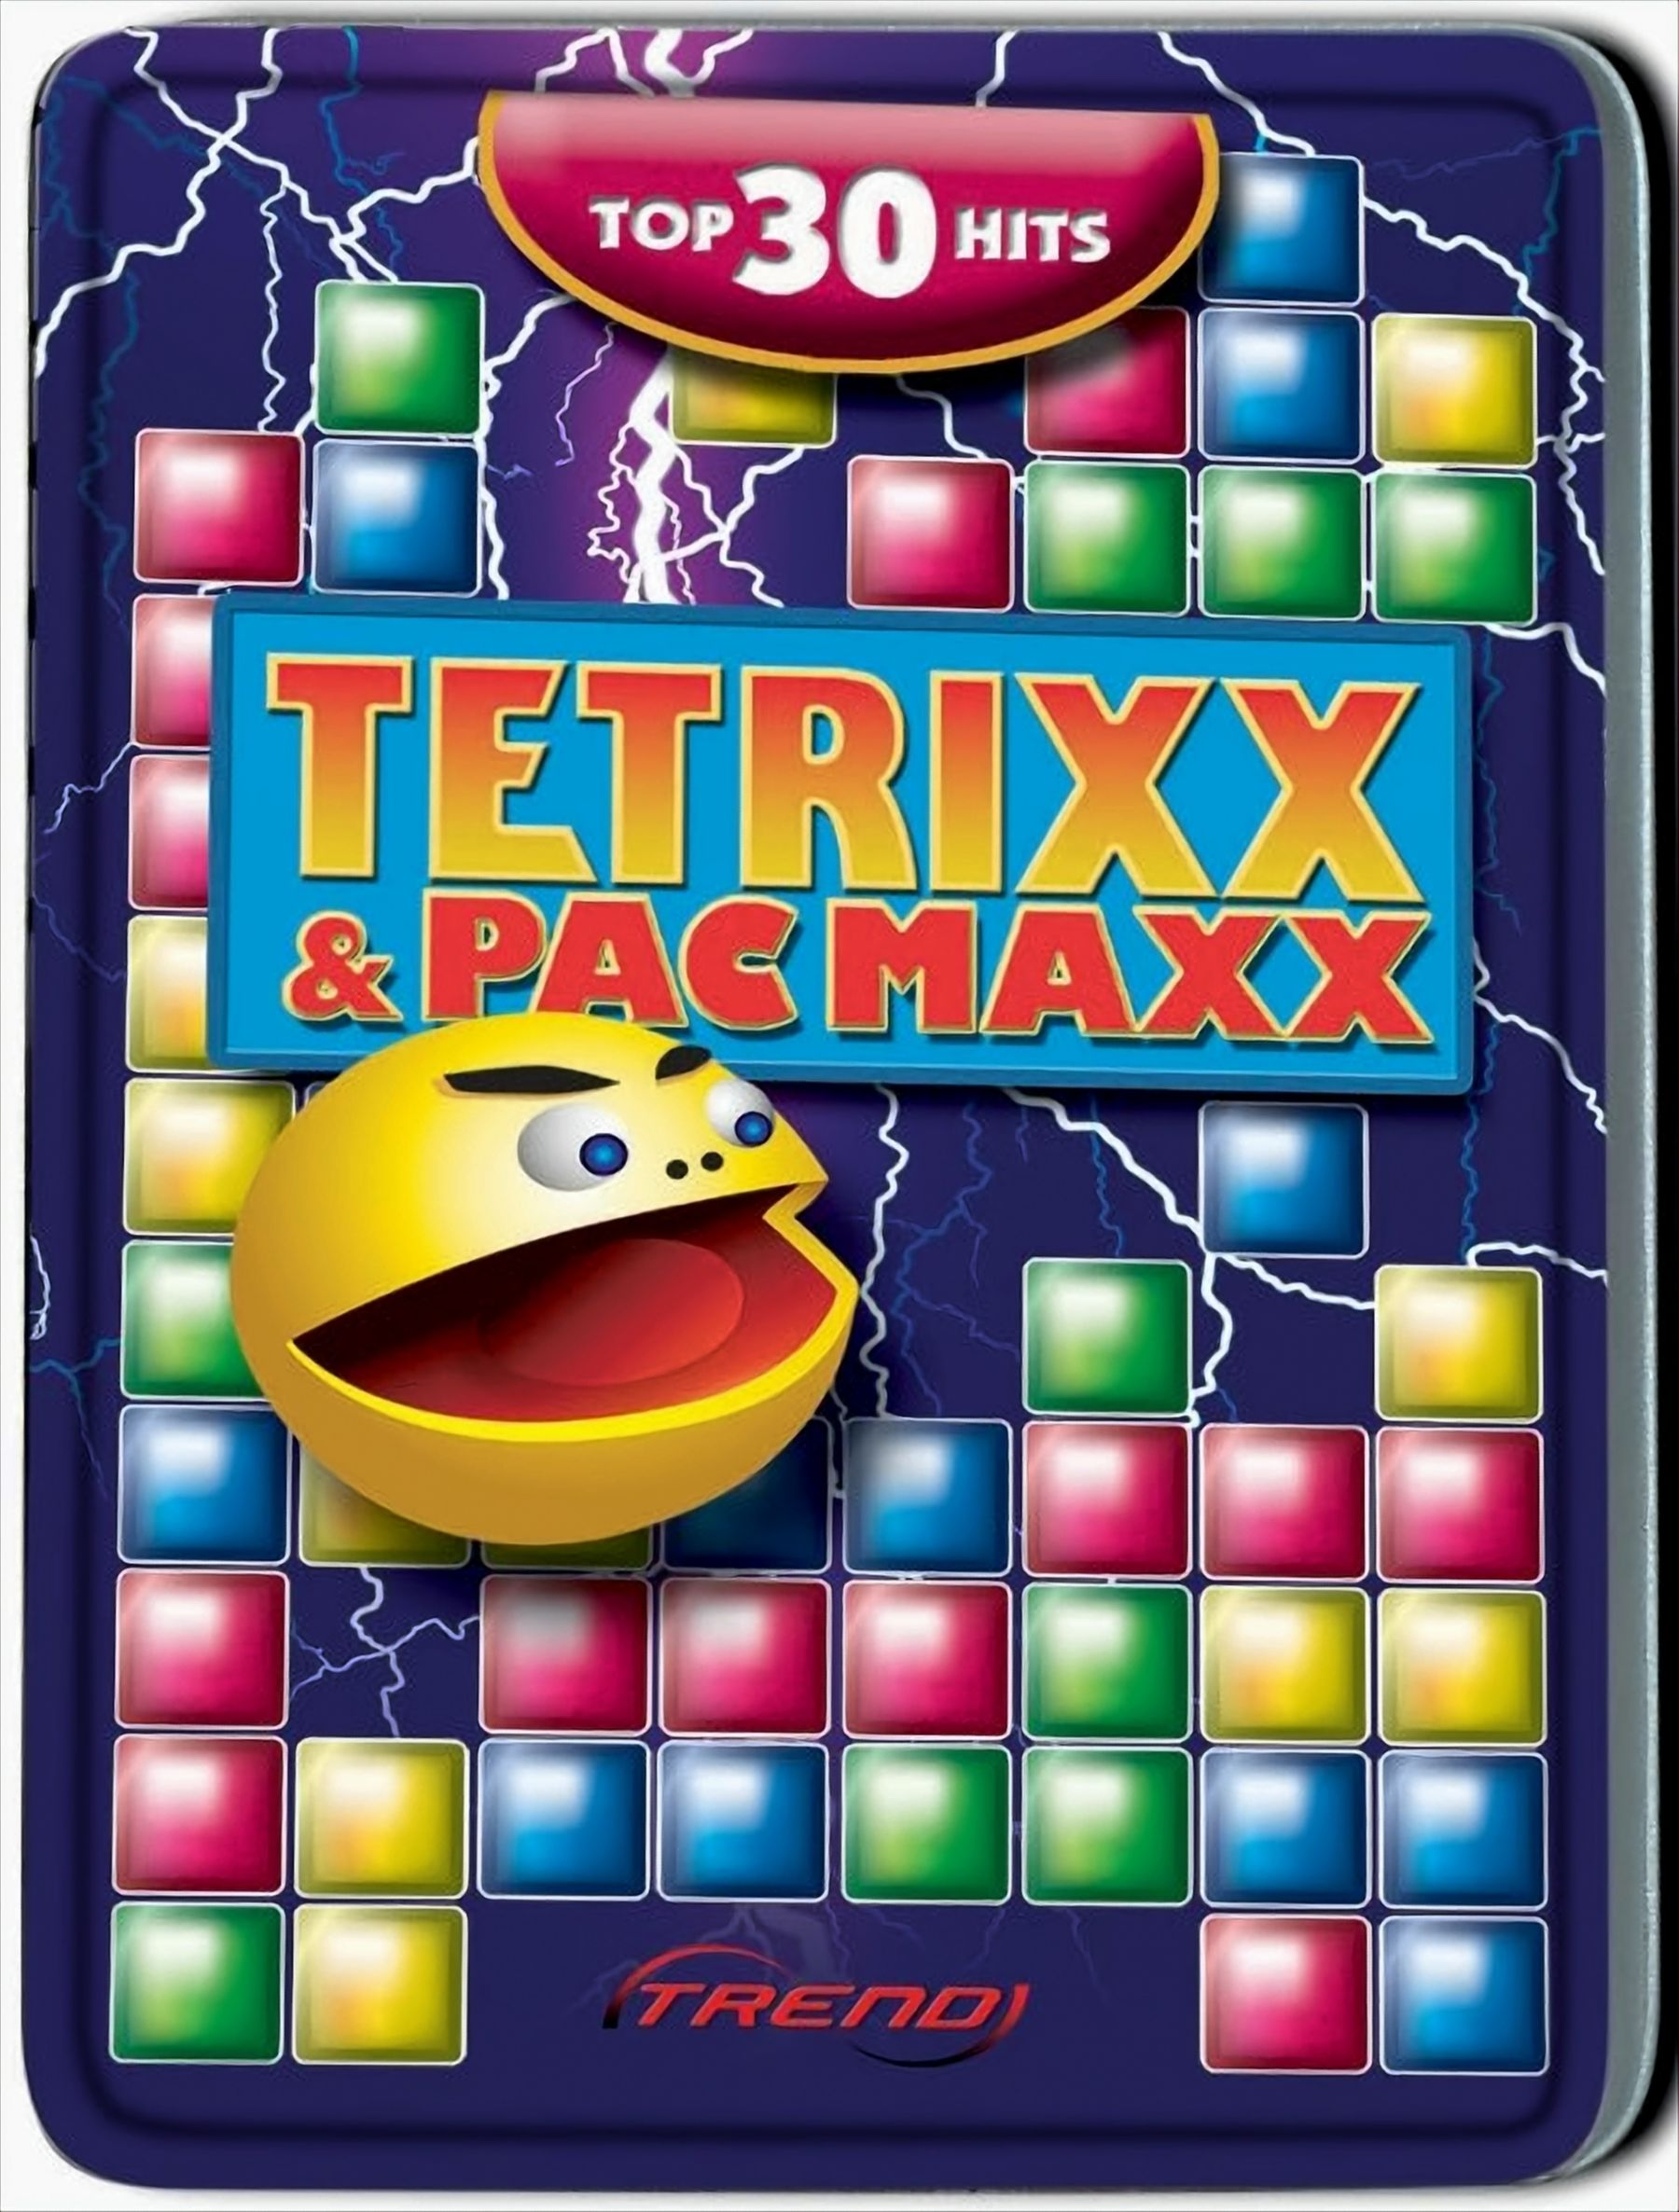 TOP 30 Hits Varianten Tetrixx & [PC] in Metallbox PacMaxx 